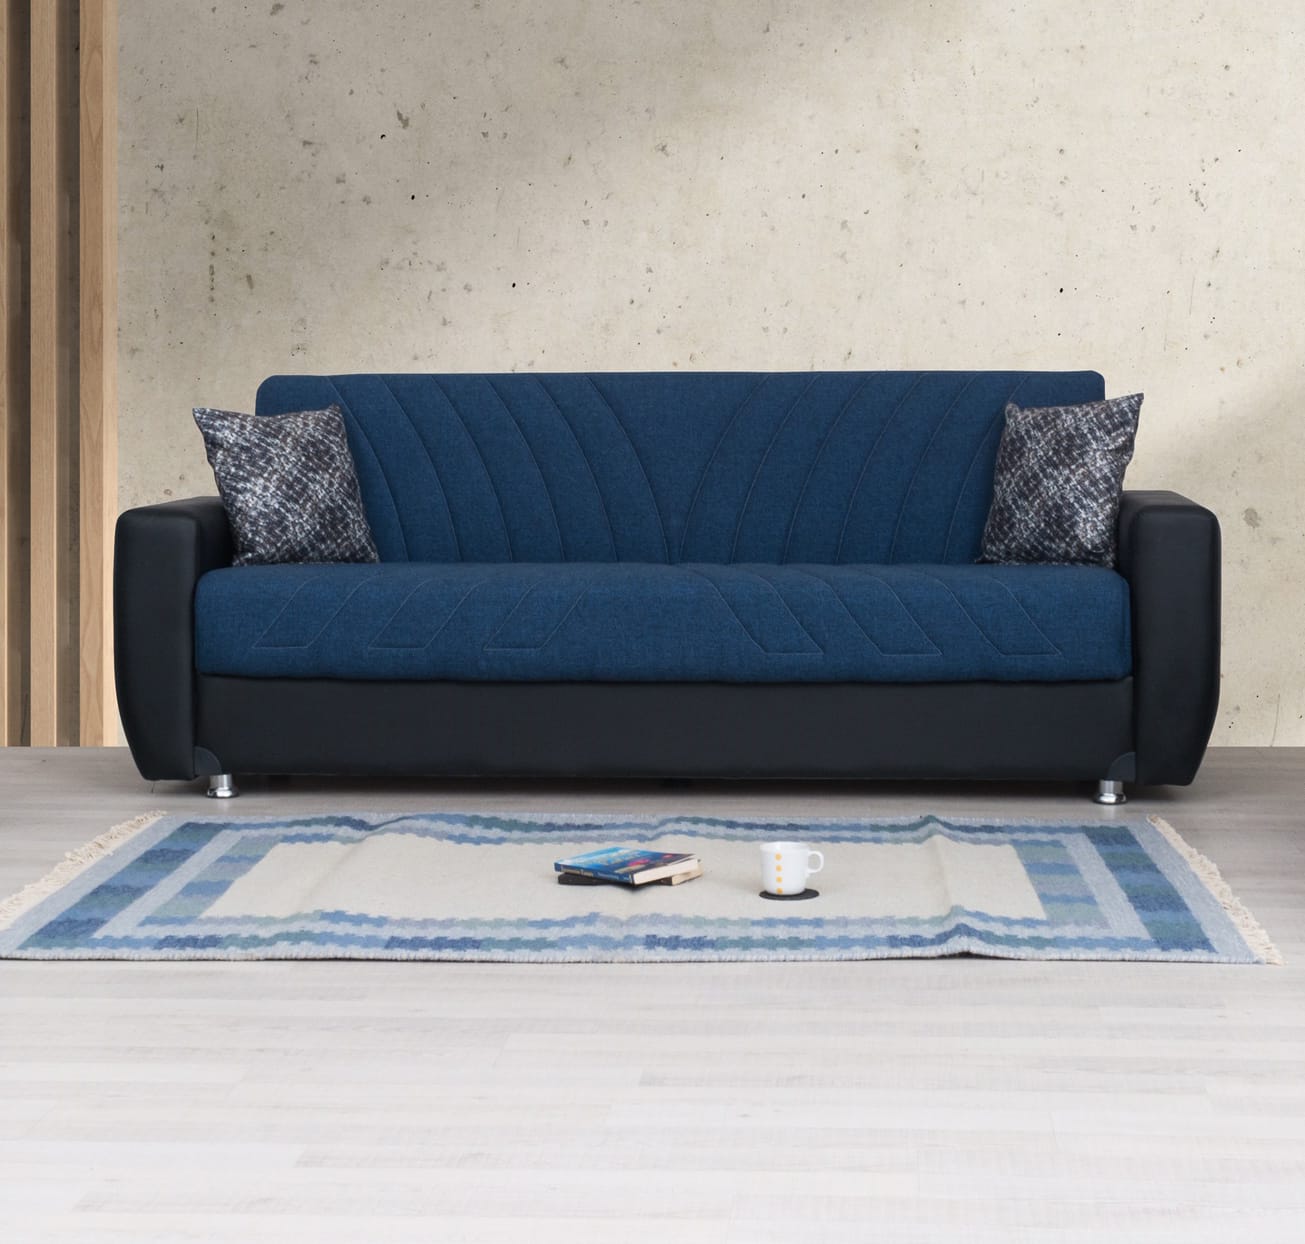 Rana Navy Blue Fabric W Black PU Leather Sofa Bed By Alpha Furniture